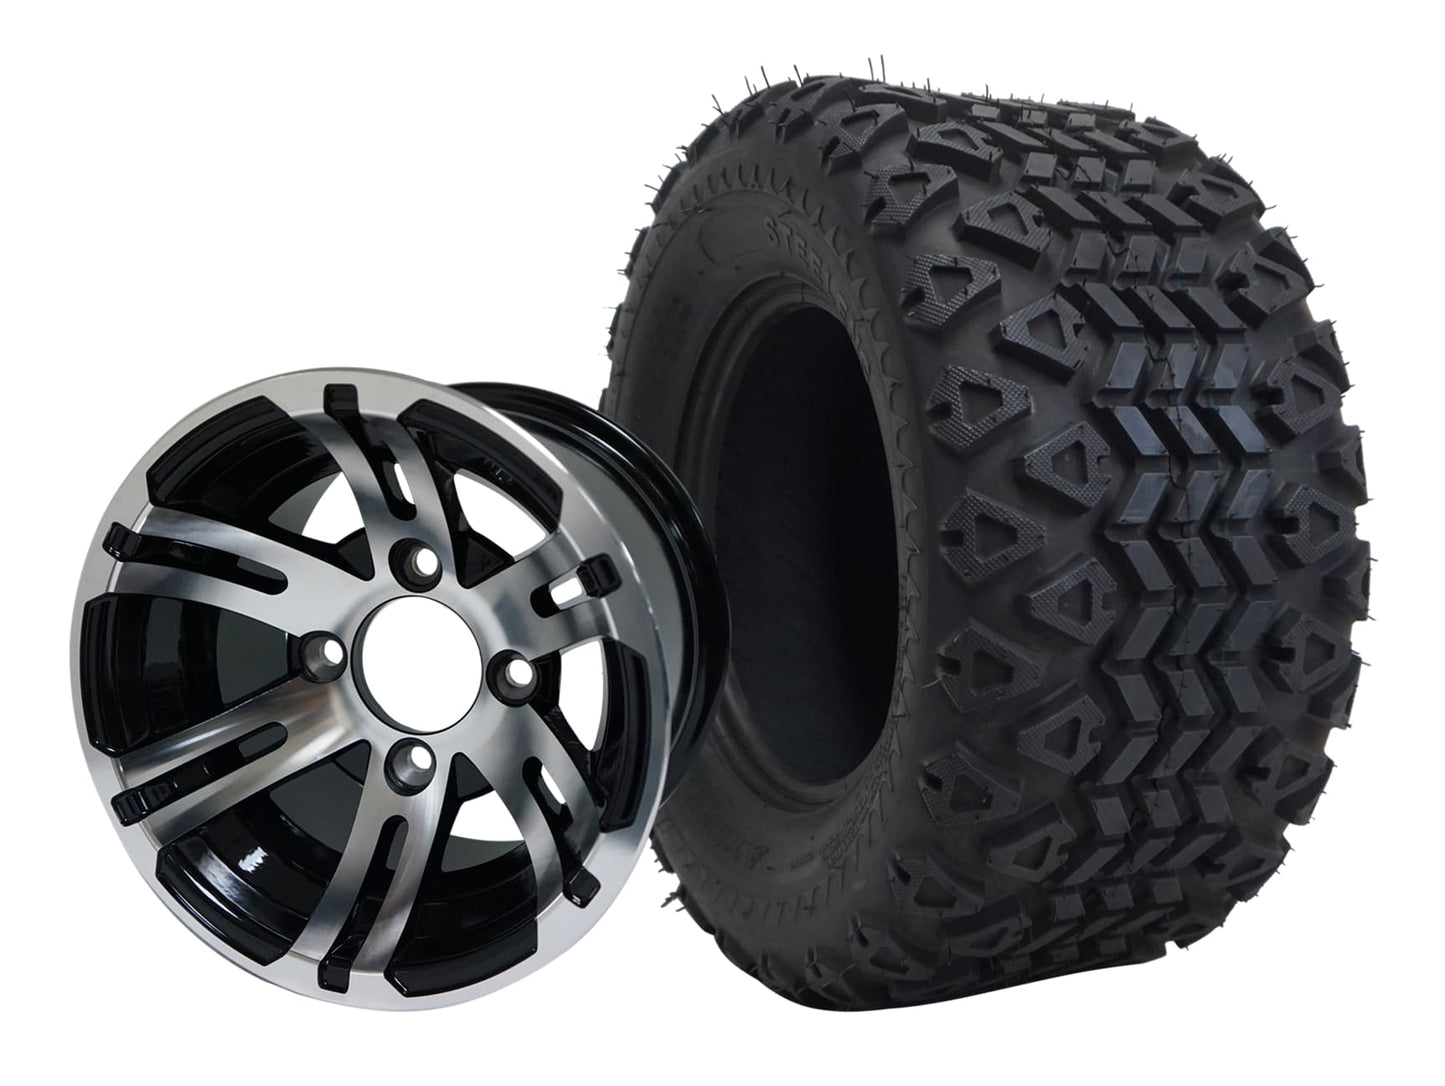 BNDL-TR1007-WH1004-LN0001-CC0001 – SGC 10″ Bulldog Machined/Black Wheel – Aluminum Alloy / STEELENG 20″x10″-10″ All Terrain Tire DOT approved - Set of 4